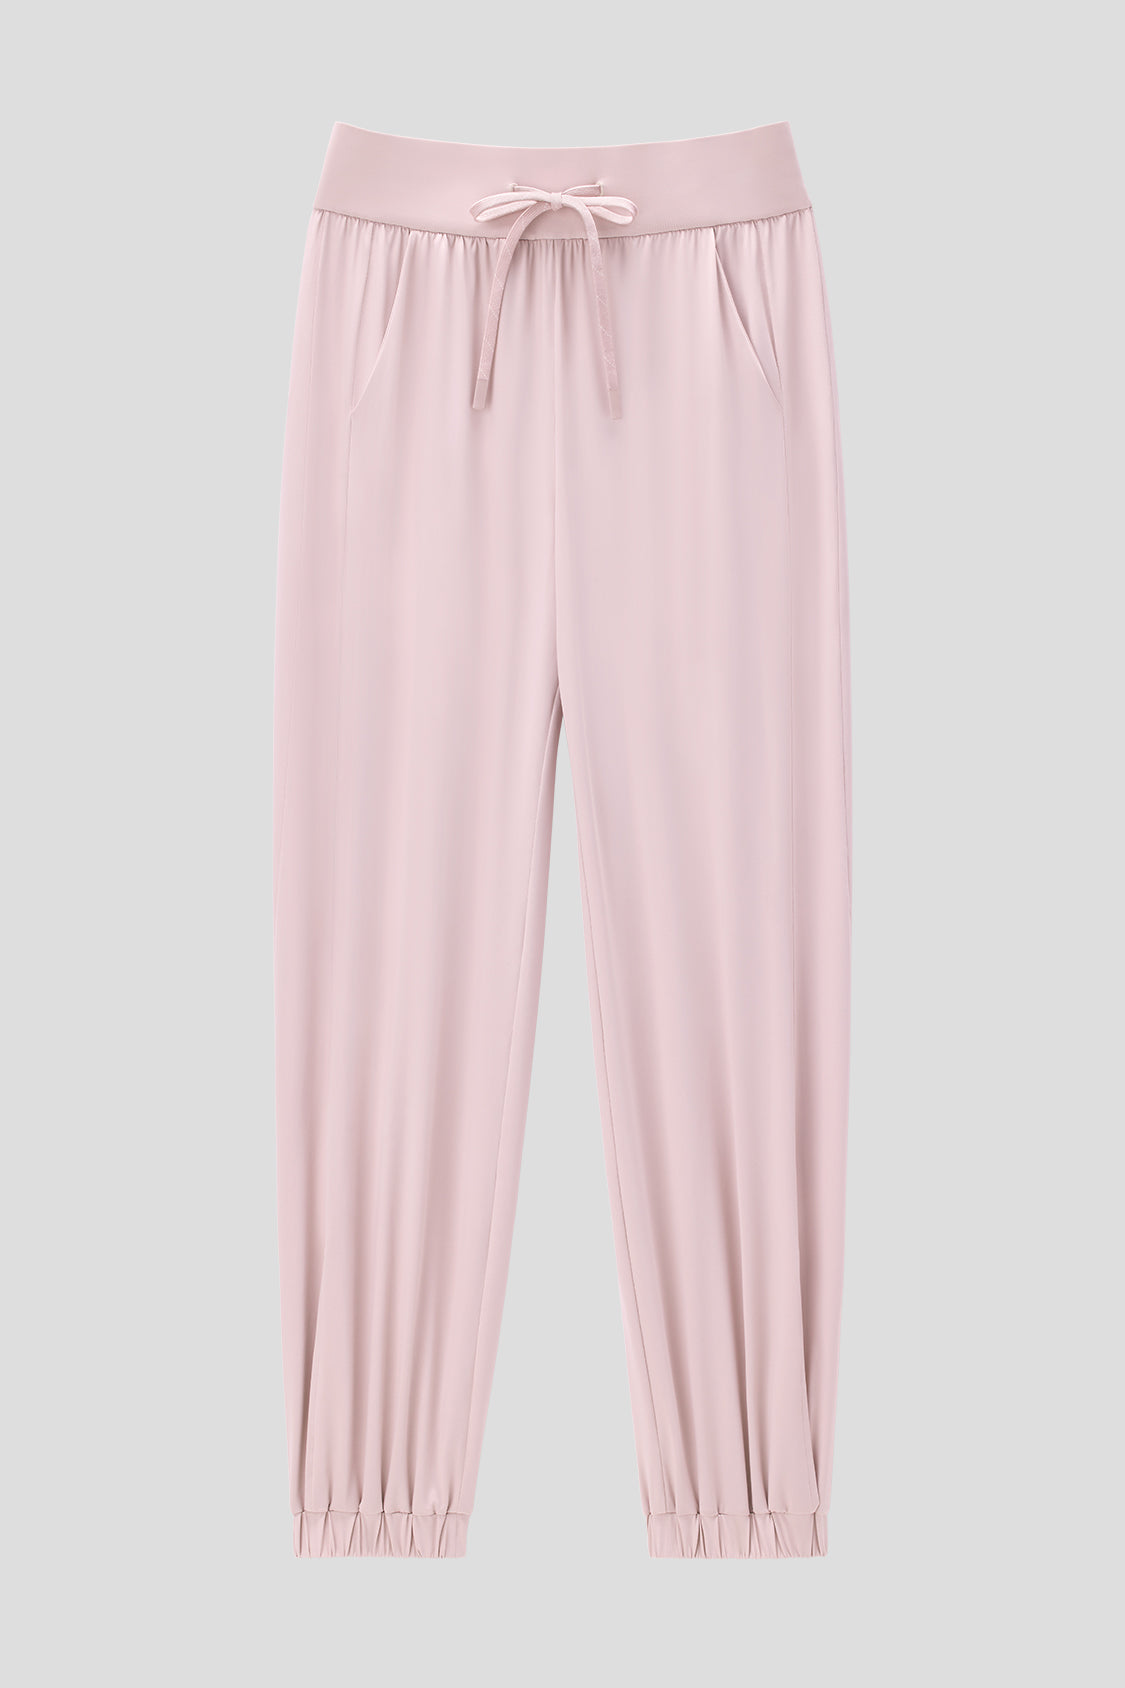 beneunder women's uv protection pants upf50+ #color_misty sea graybeneunder women's uv protection pants upf50+ #color_taro gray pink